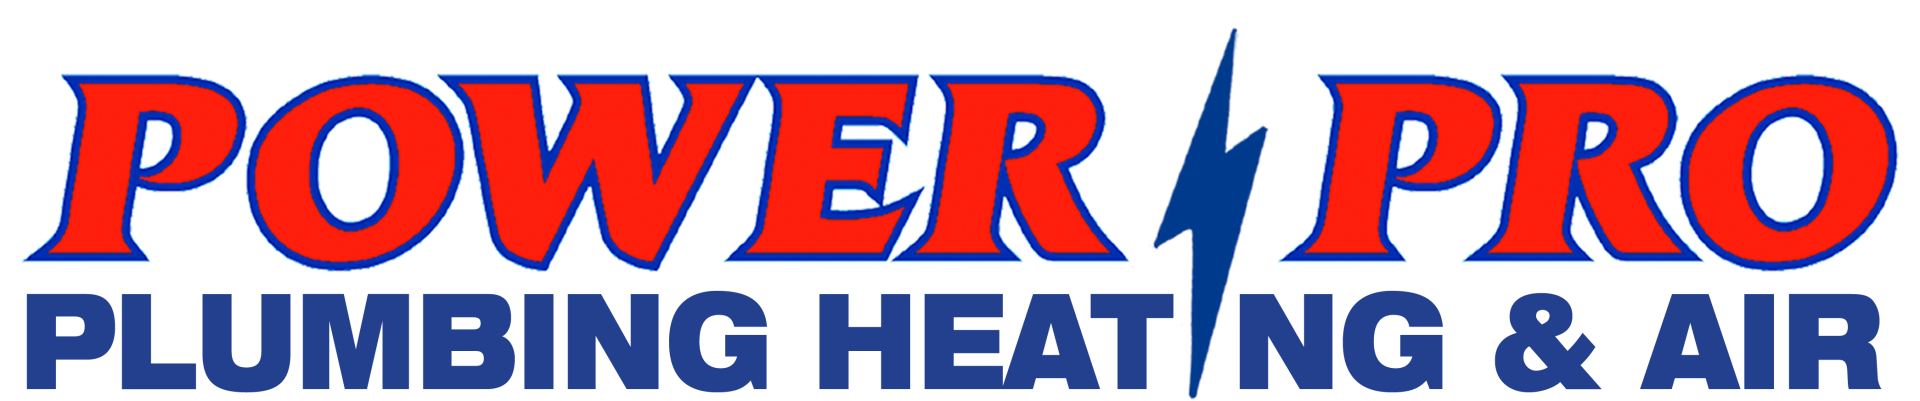 Power Pro Plumbing Heating & Air company logo